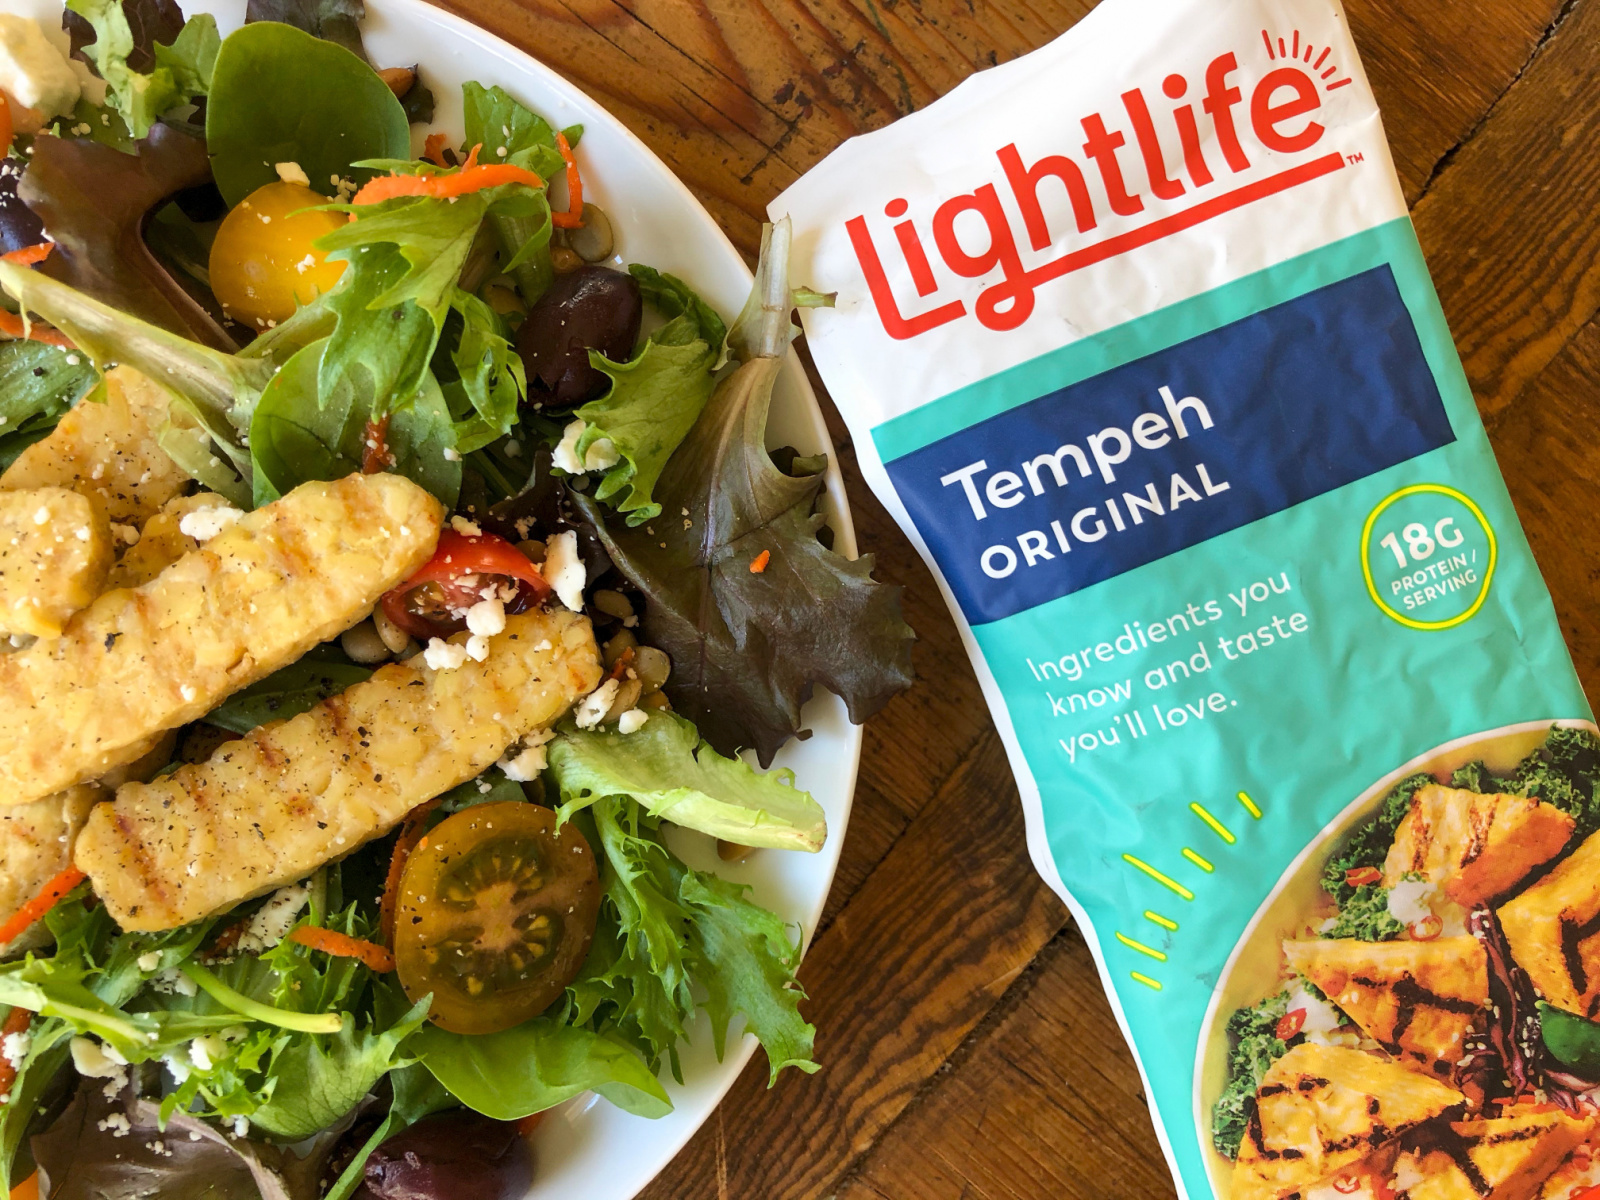 Lightlife Organic Soy Tempeh Just $2.24 At Kroger (Half Price!)